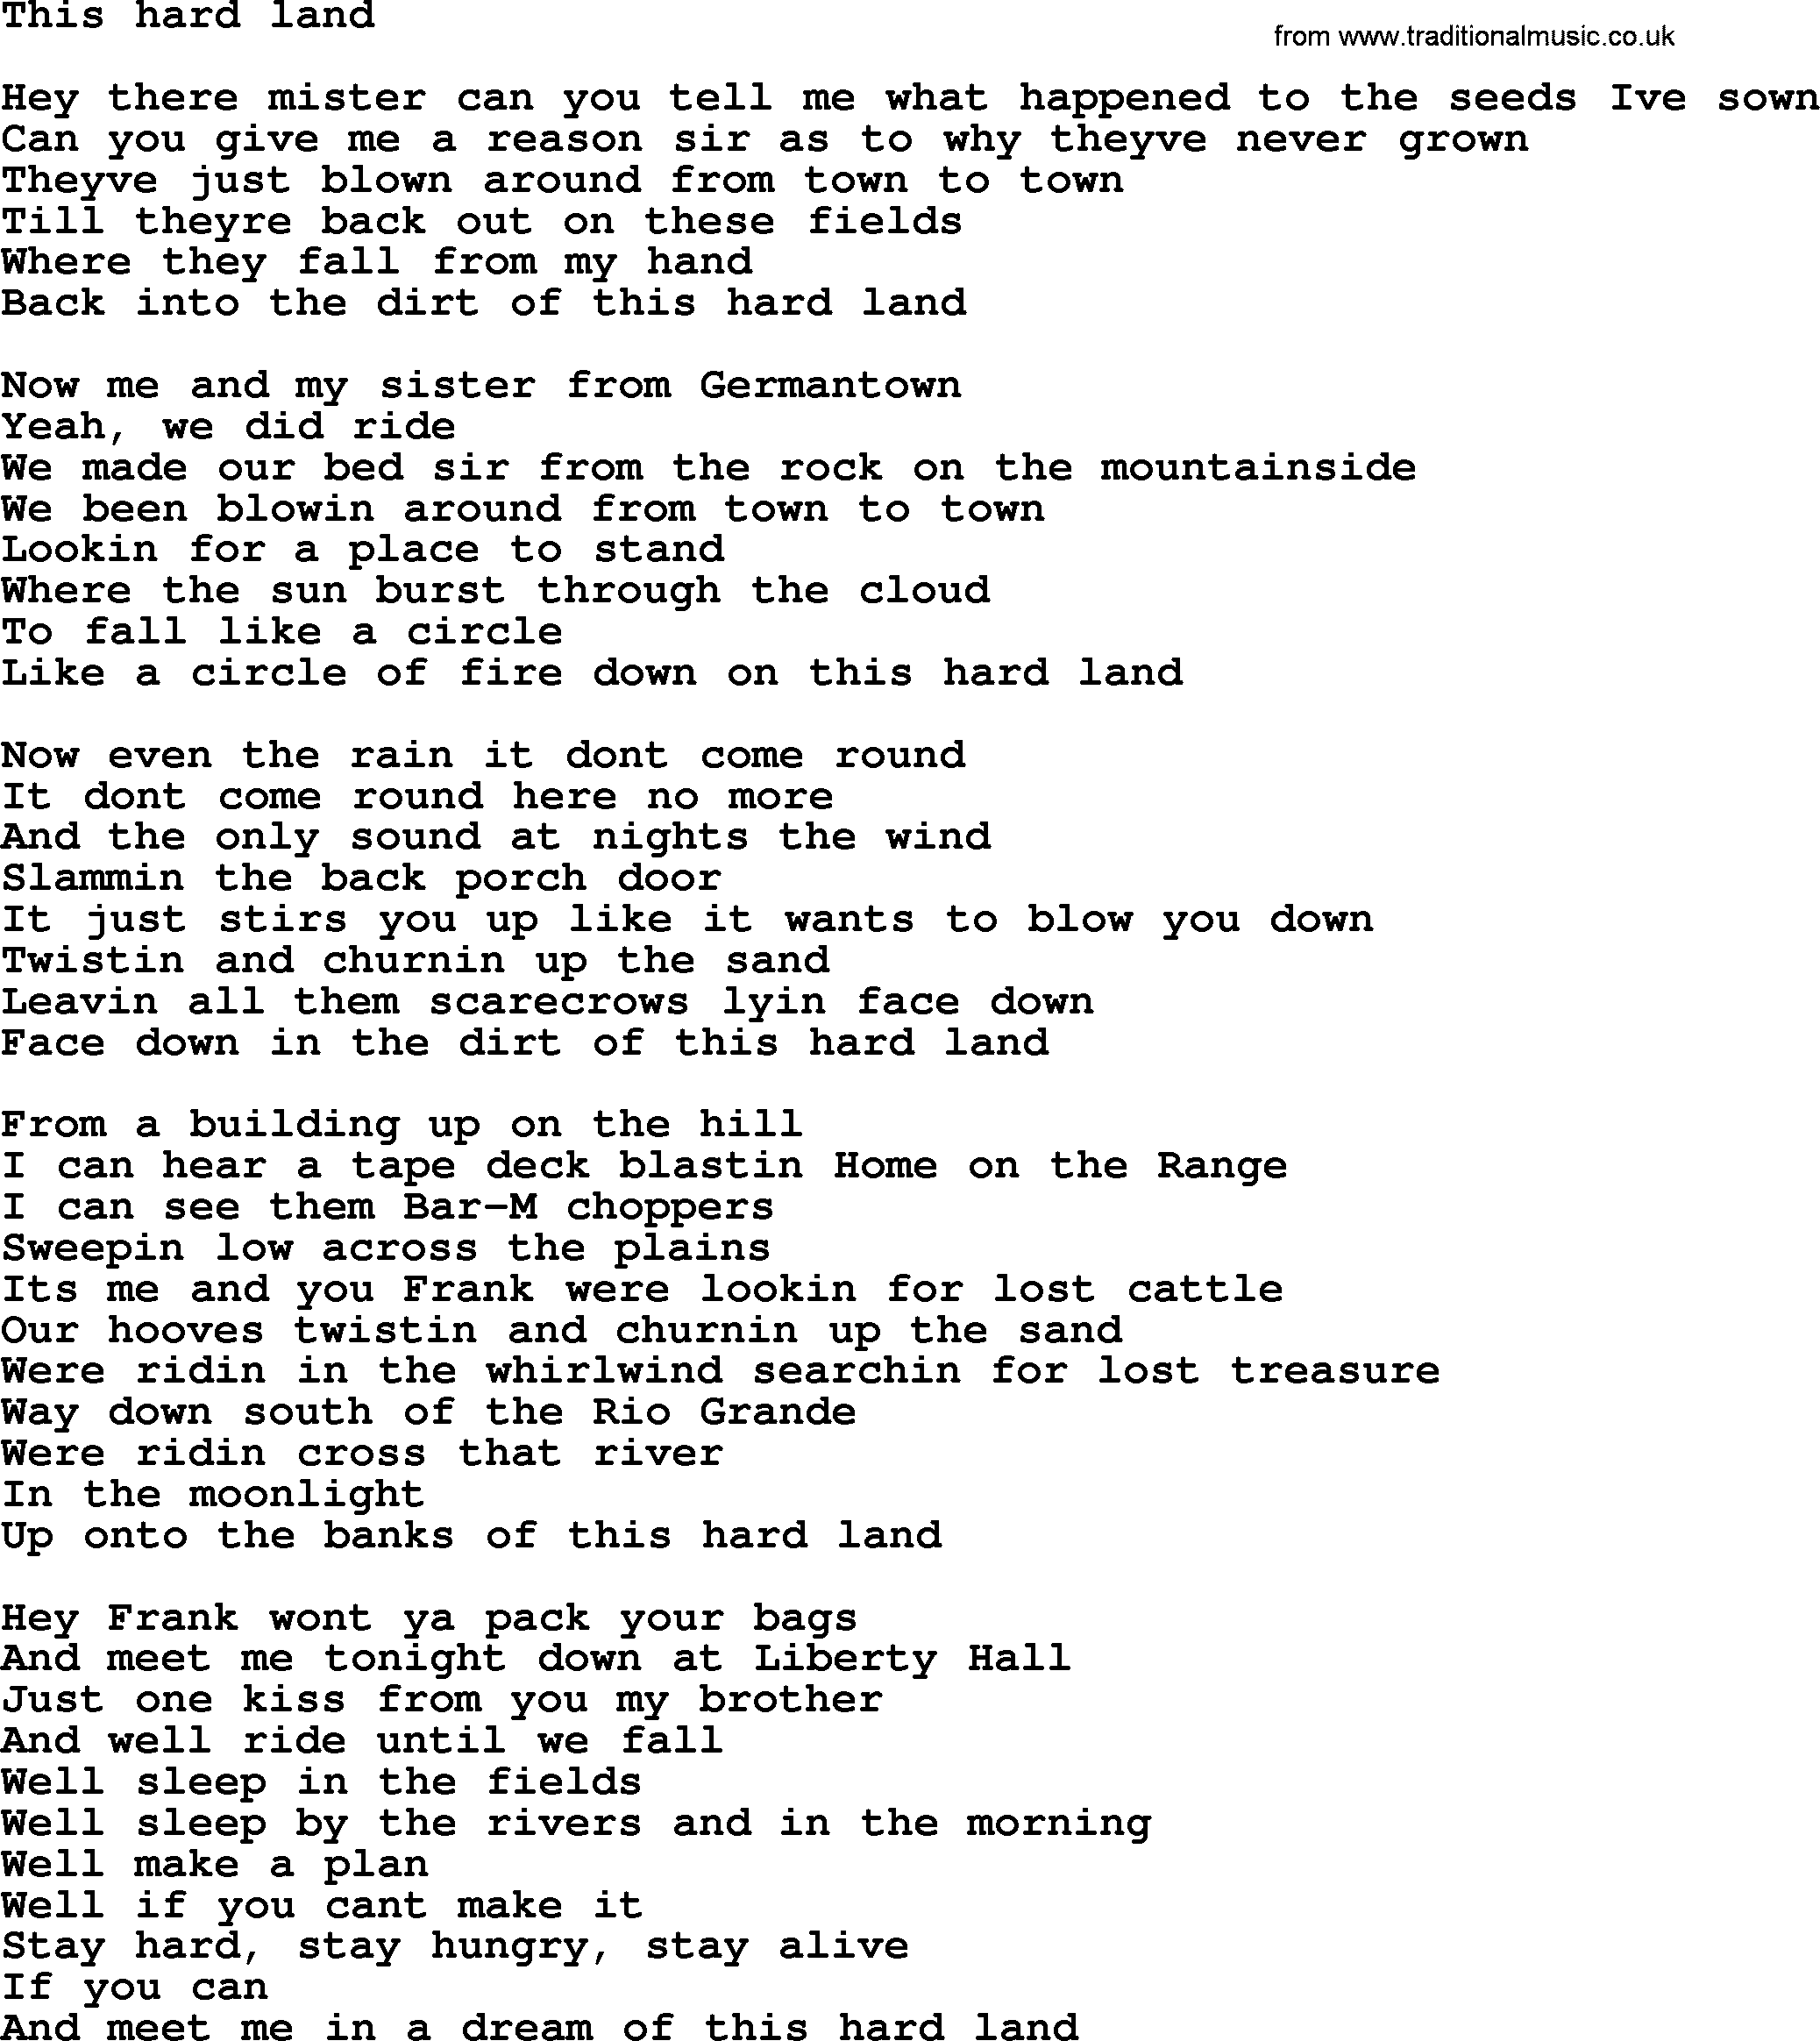 Bruce Springsteen song: This Hard Land lyrics